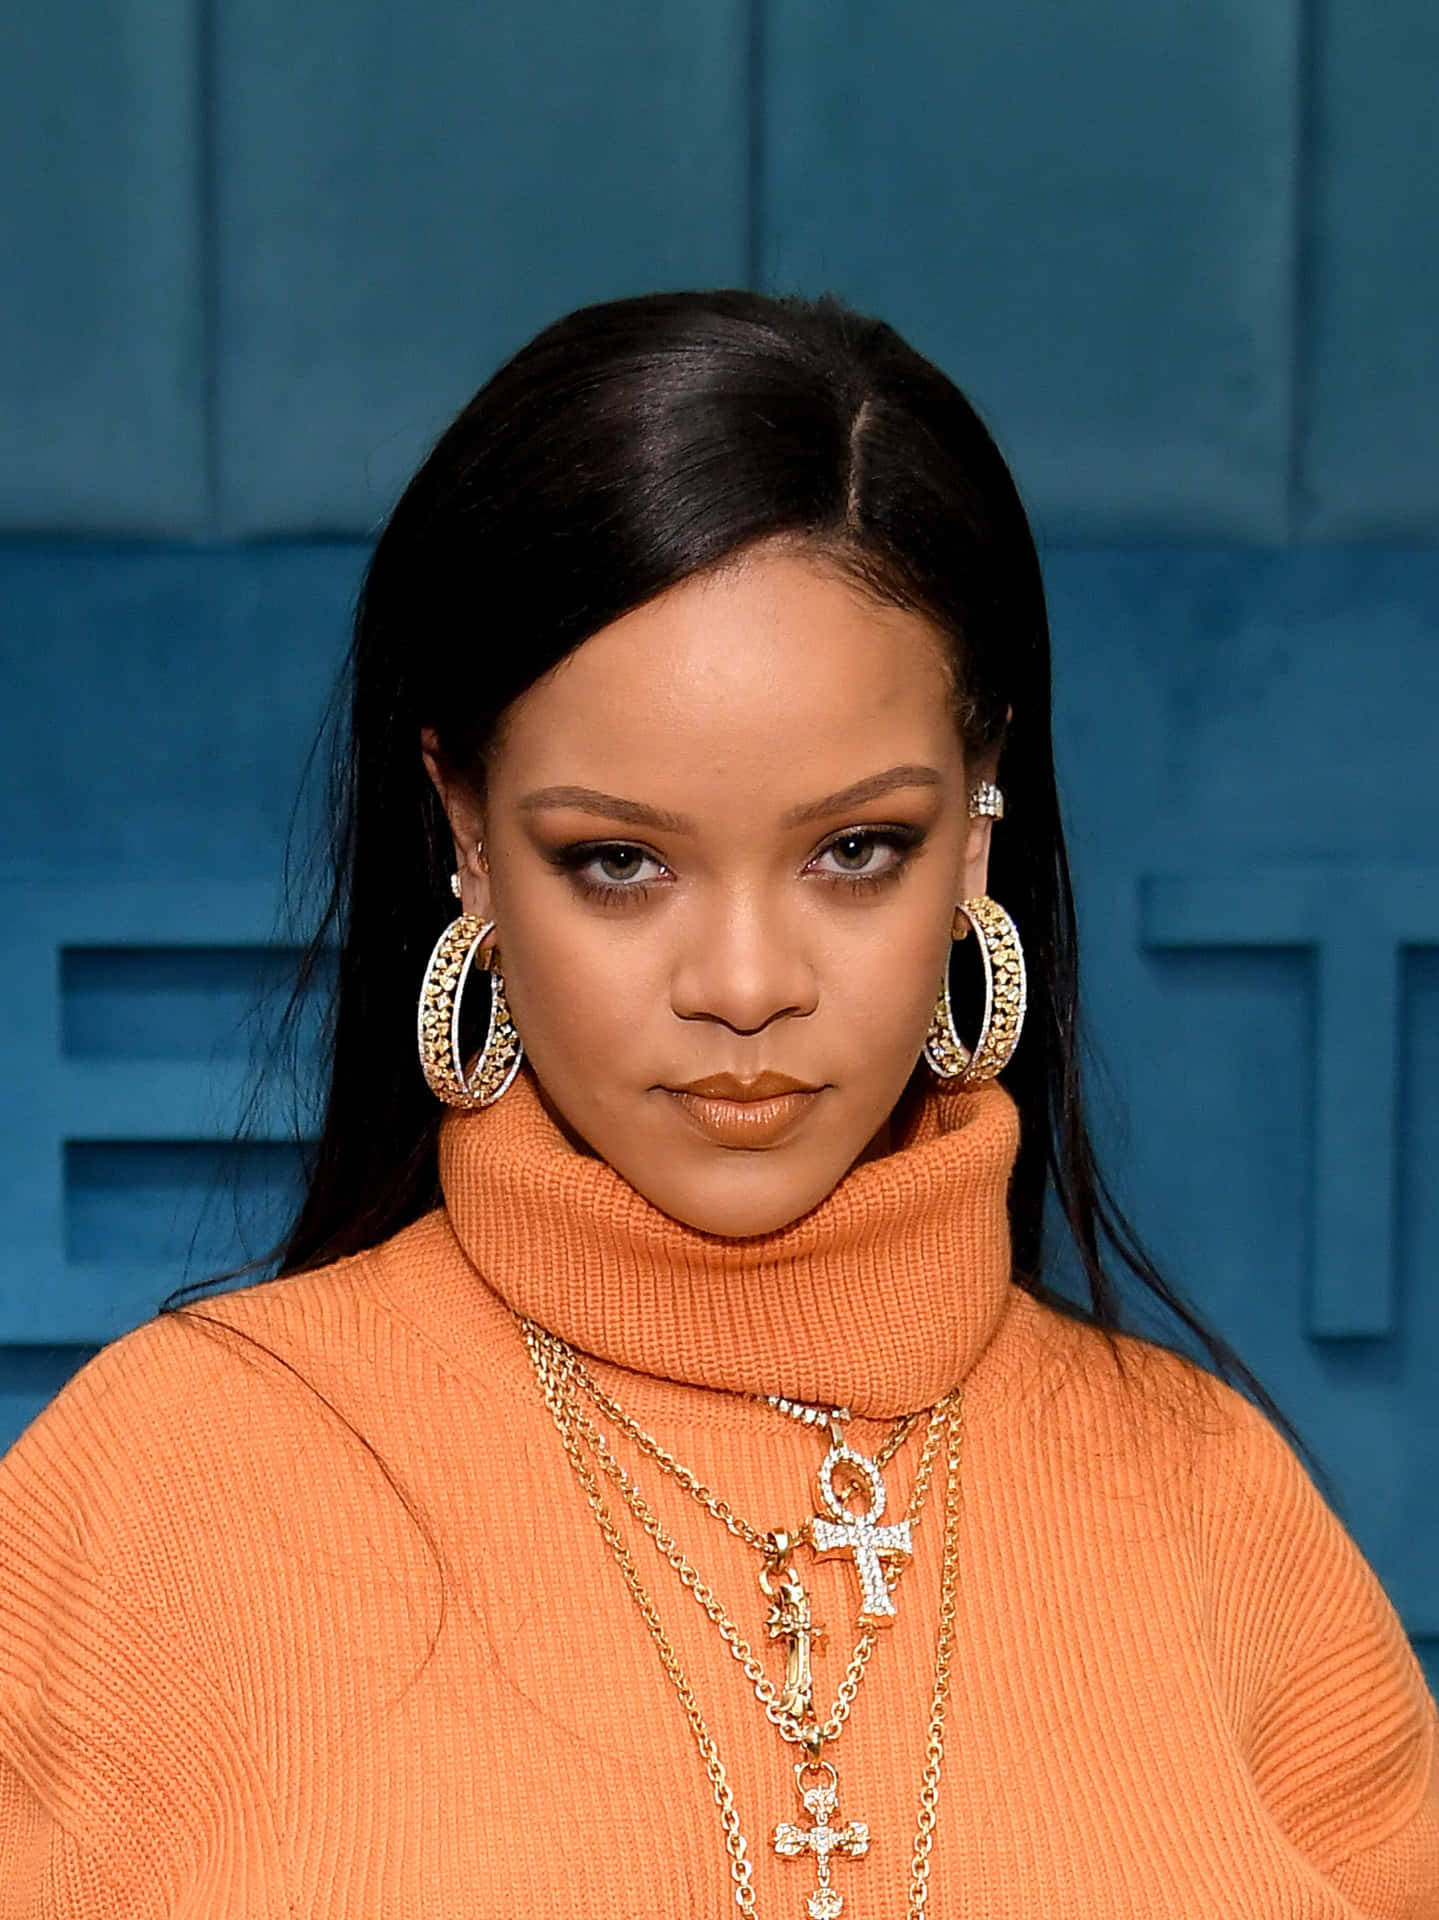 Imagende Famosos: Rihanna